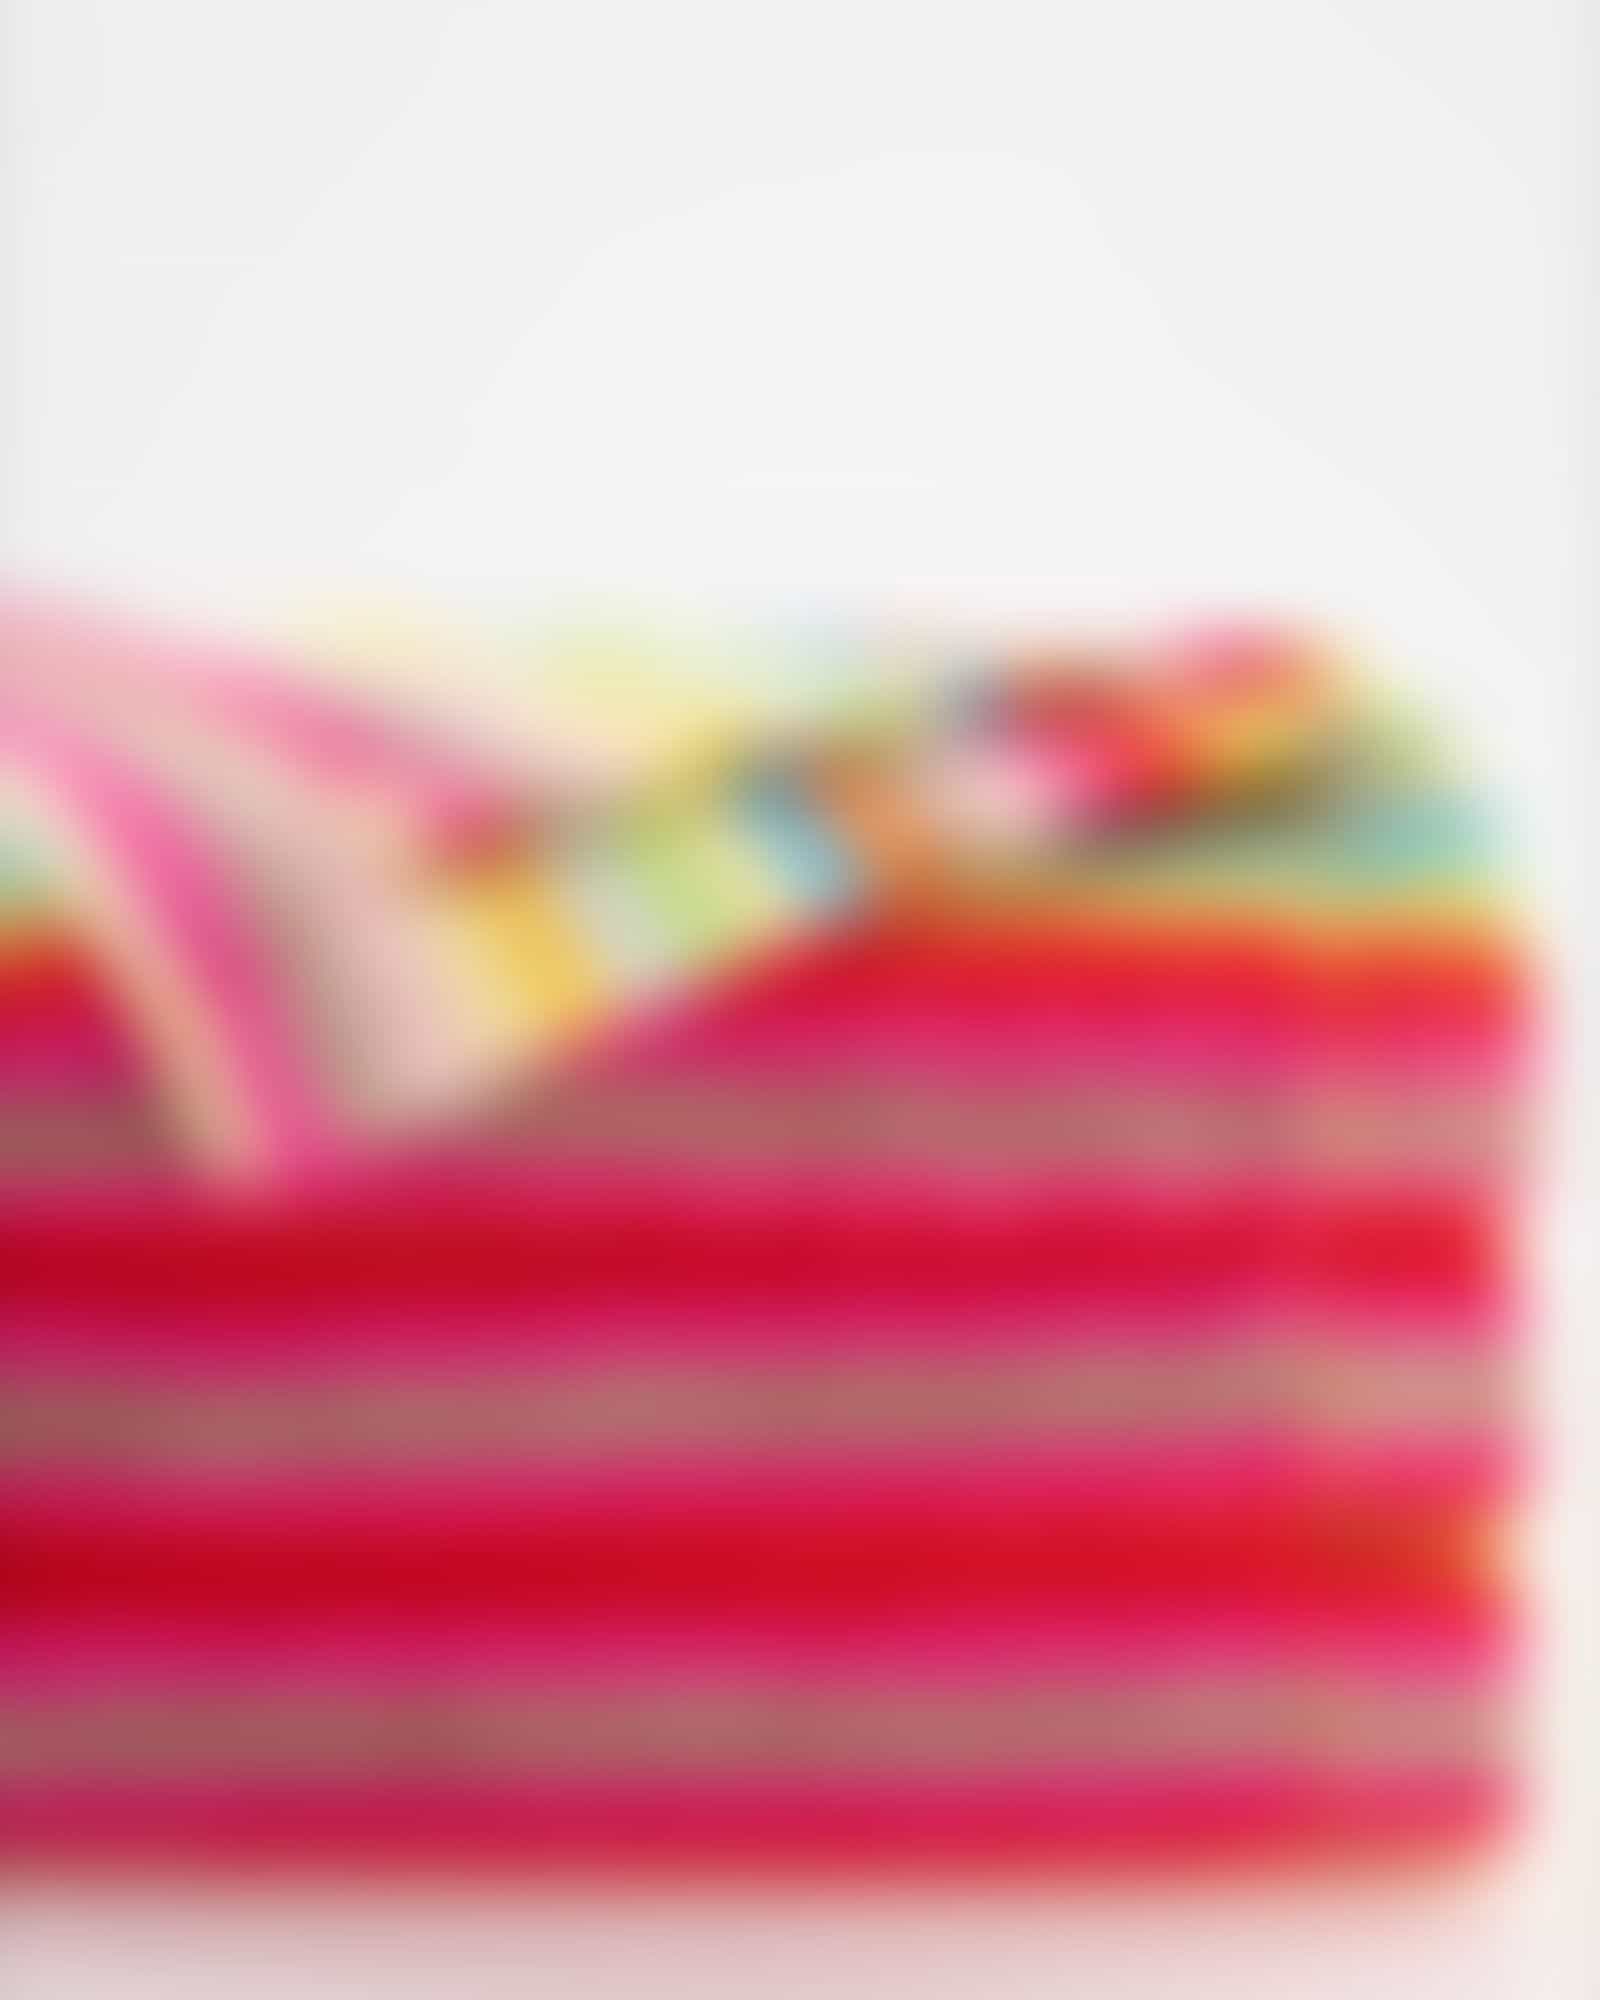 Cawö - Life Style Streifen 7008 - Farbe: 25 - multicolor - Gästetuch 30x50 cm